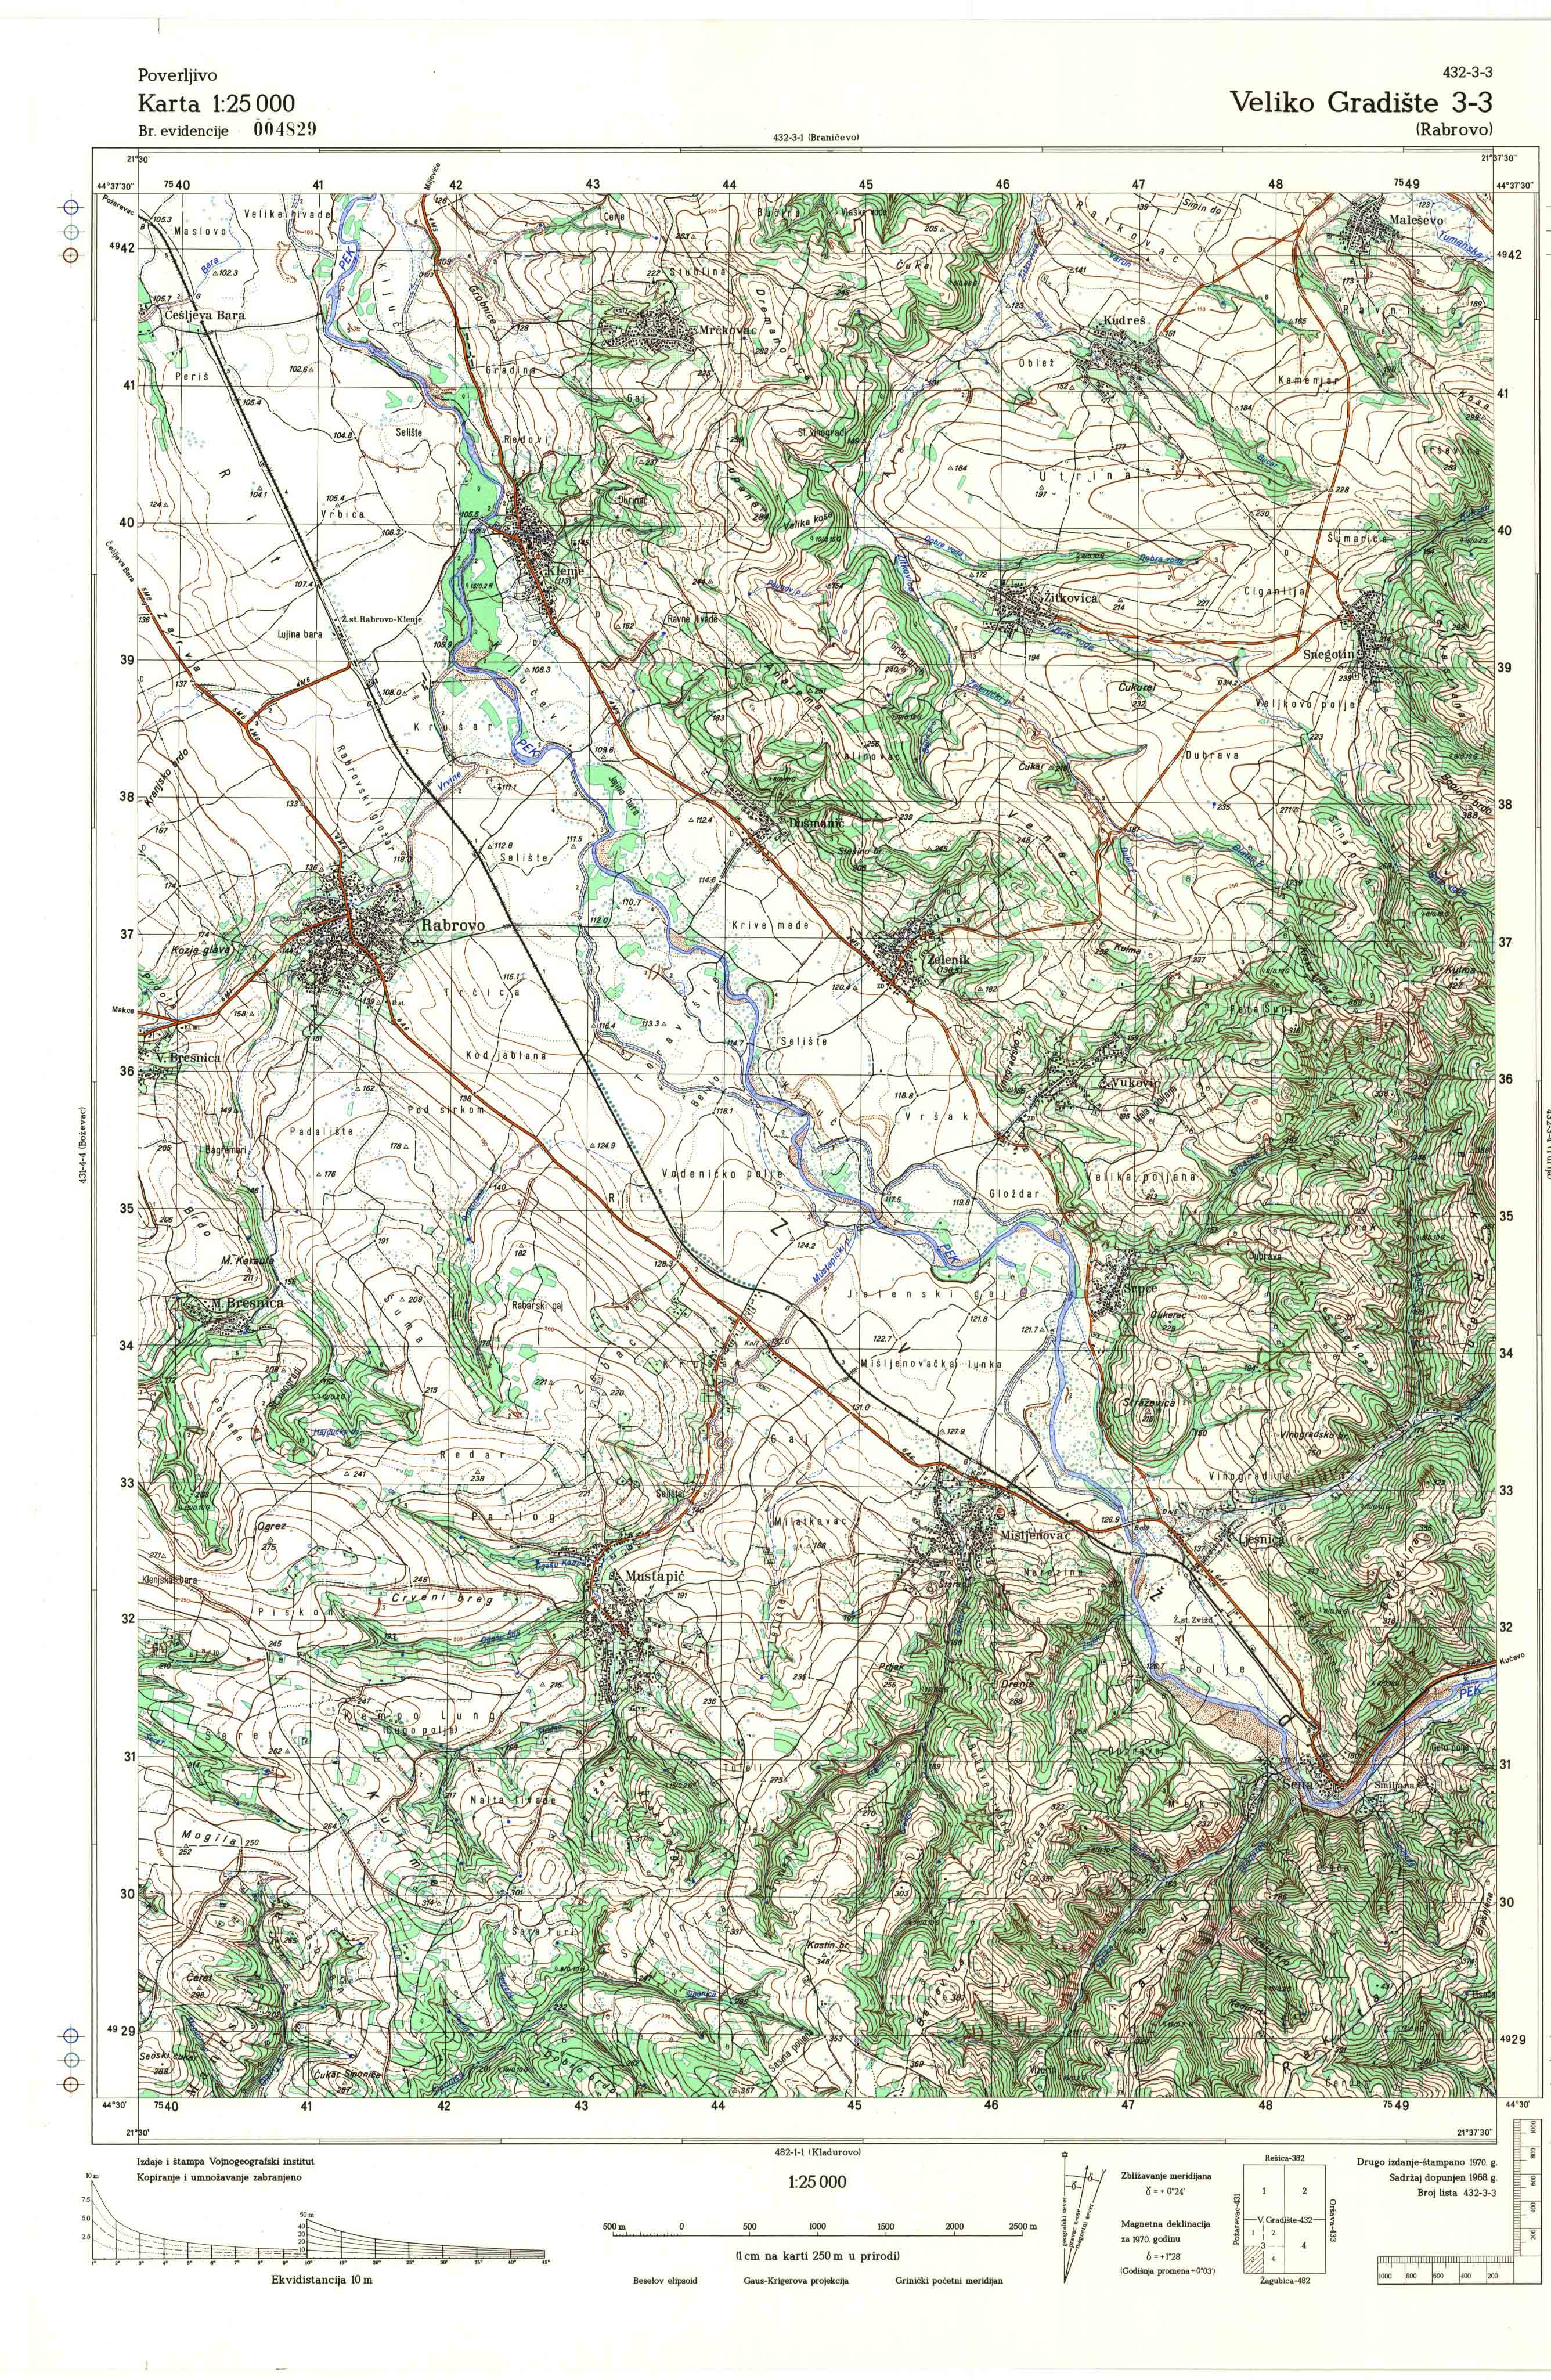  topografska karta srbije 25000 JNA  Veliko Gradište